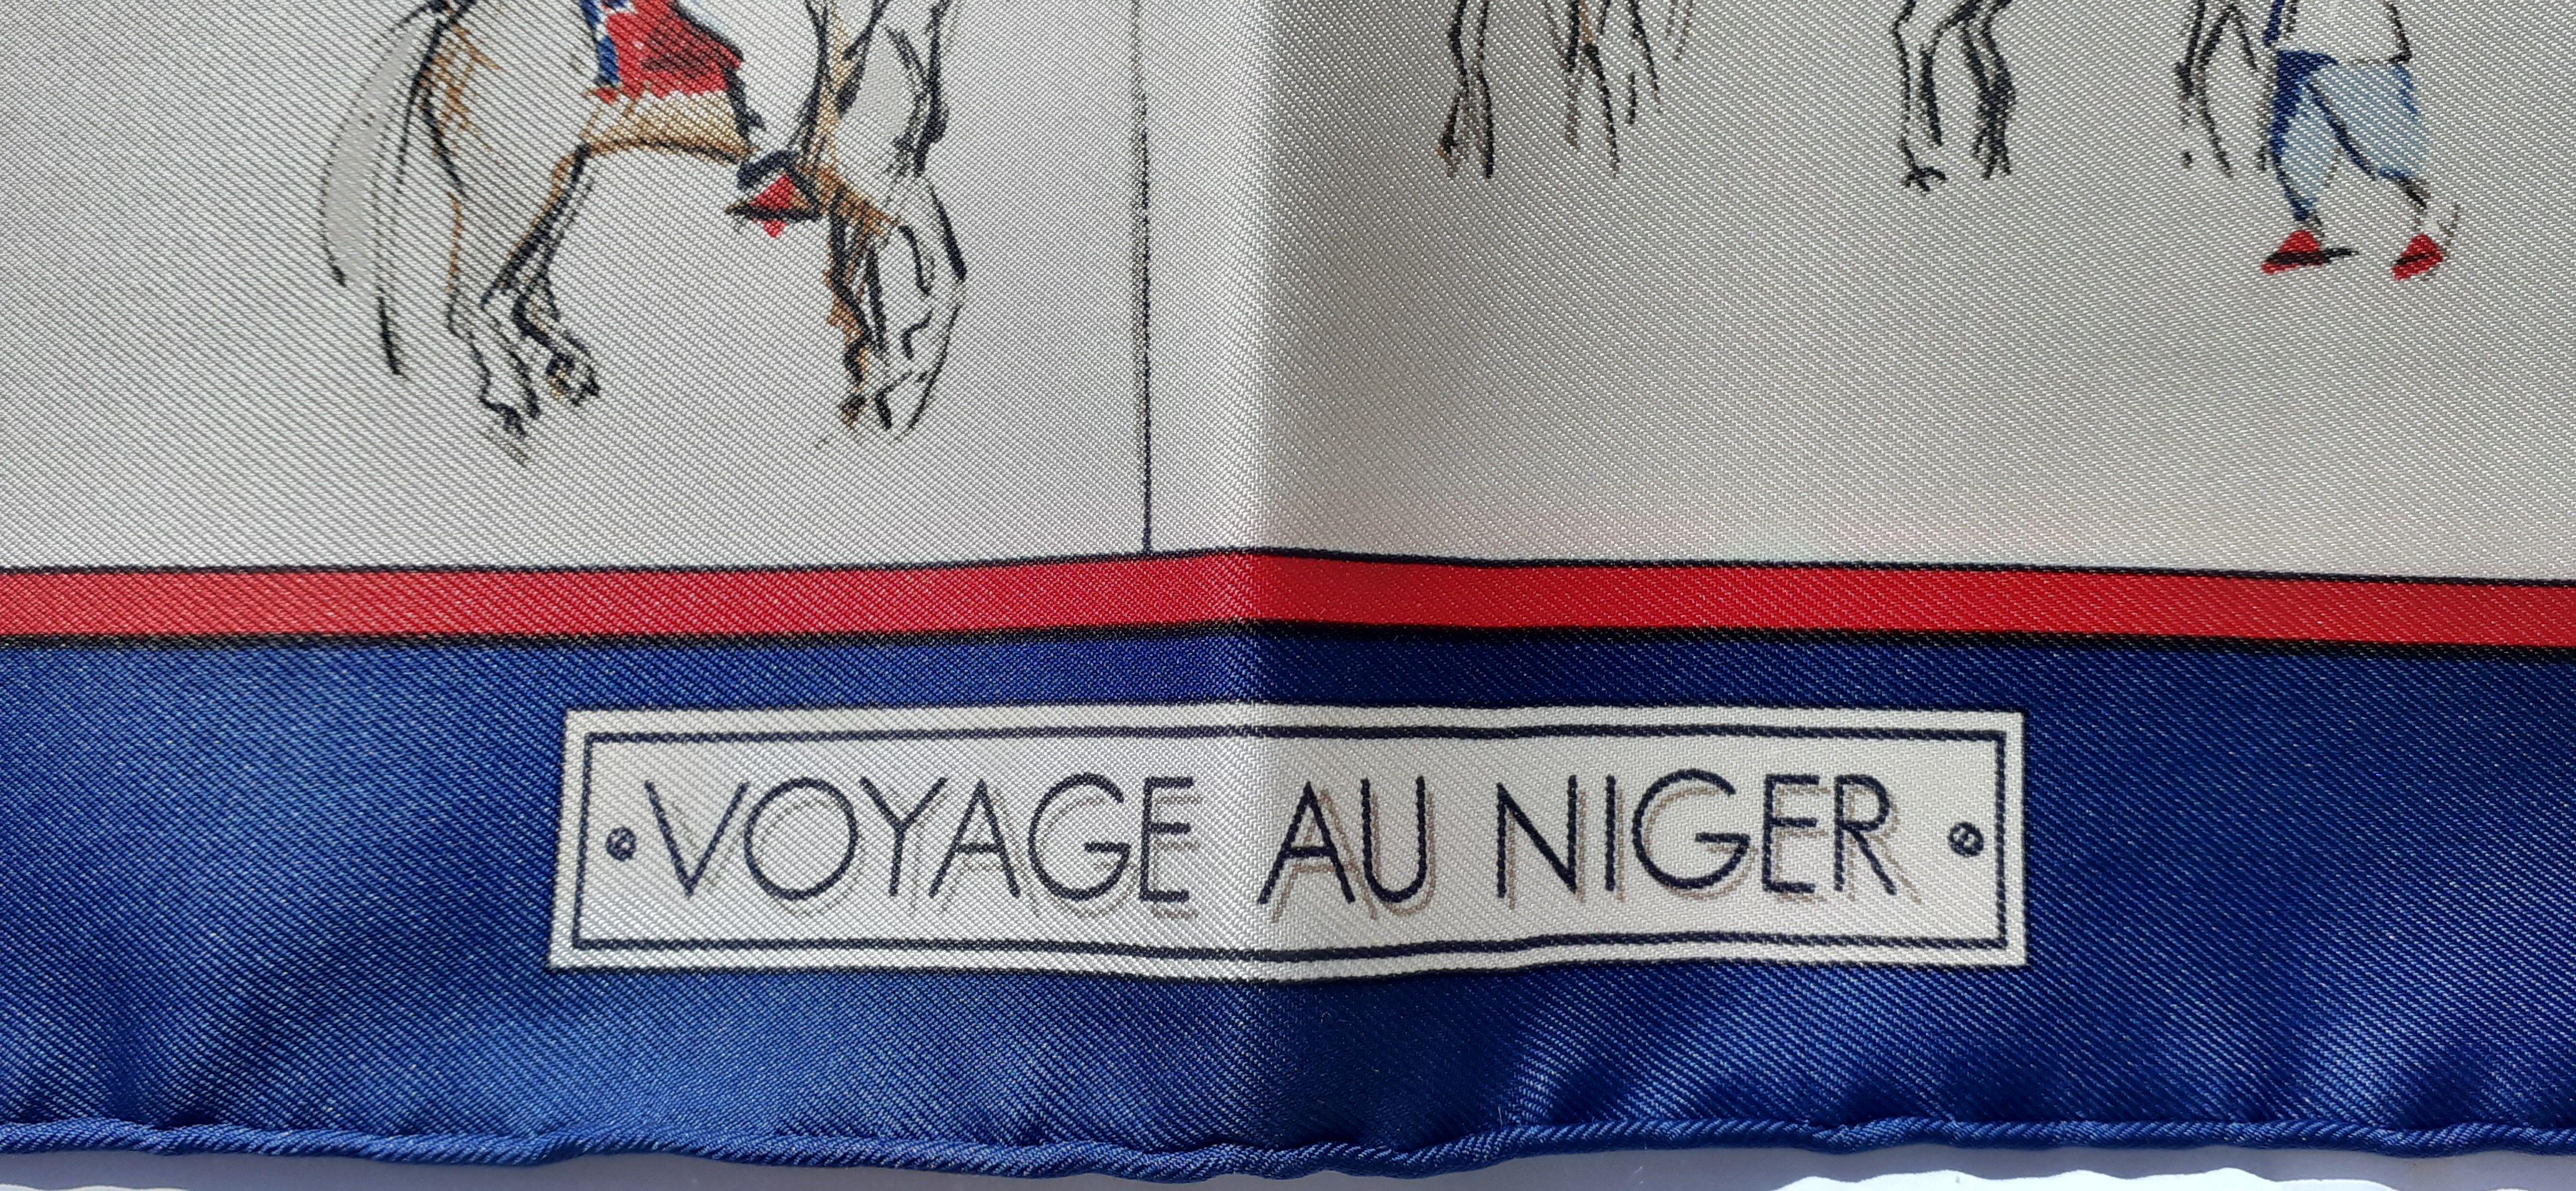 Hermès Gavroche Pocket Square Small Scarf Voyage au Niger Blue Beige 42 cm For Sale 4